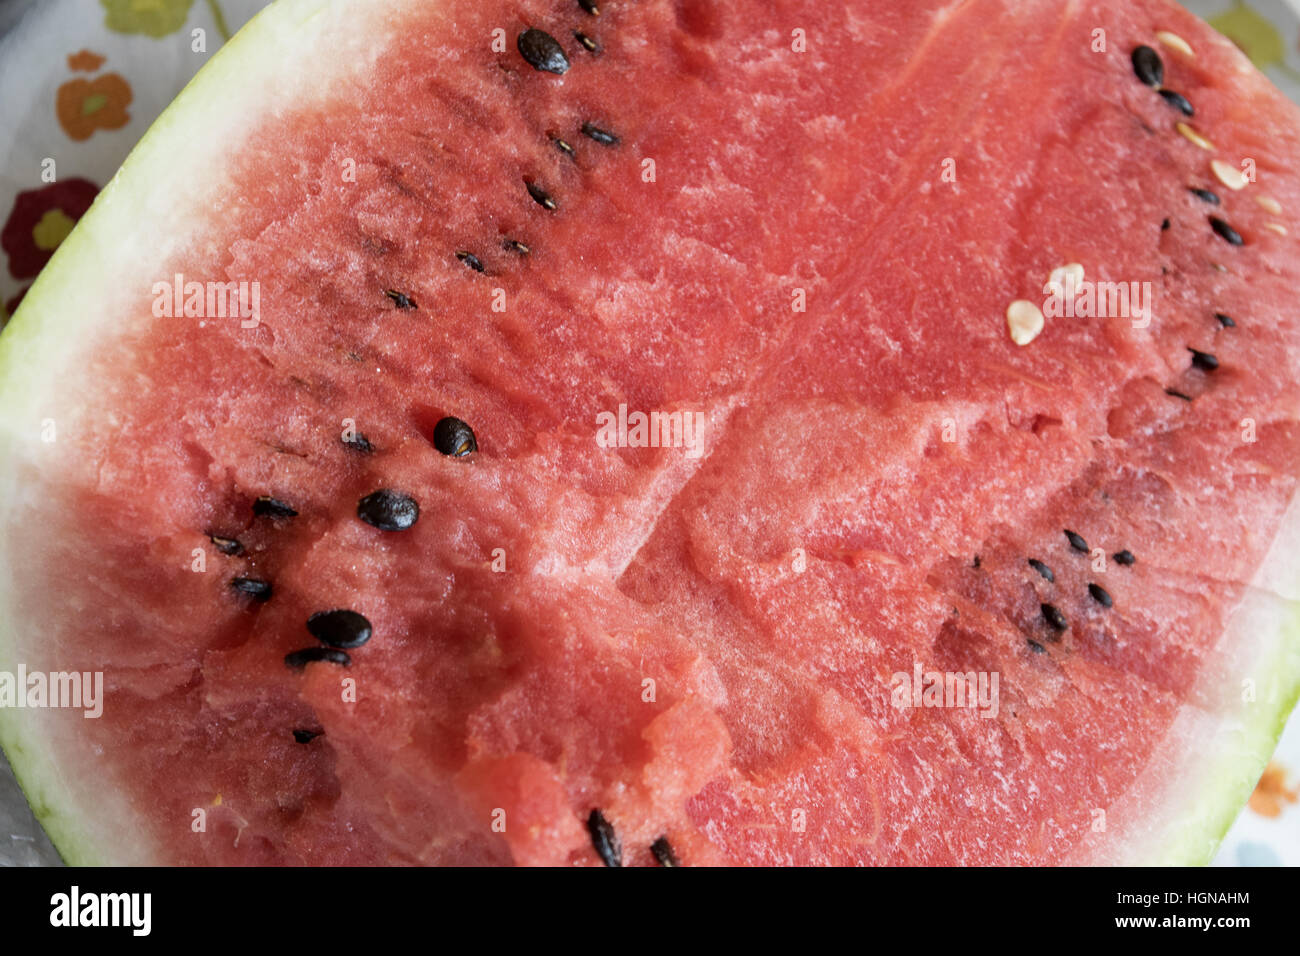 big and fresh watermelon cut half Stock Photo